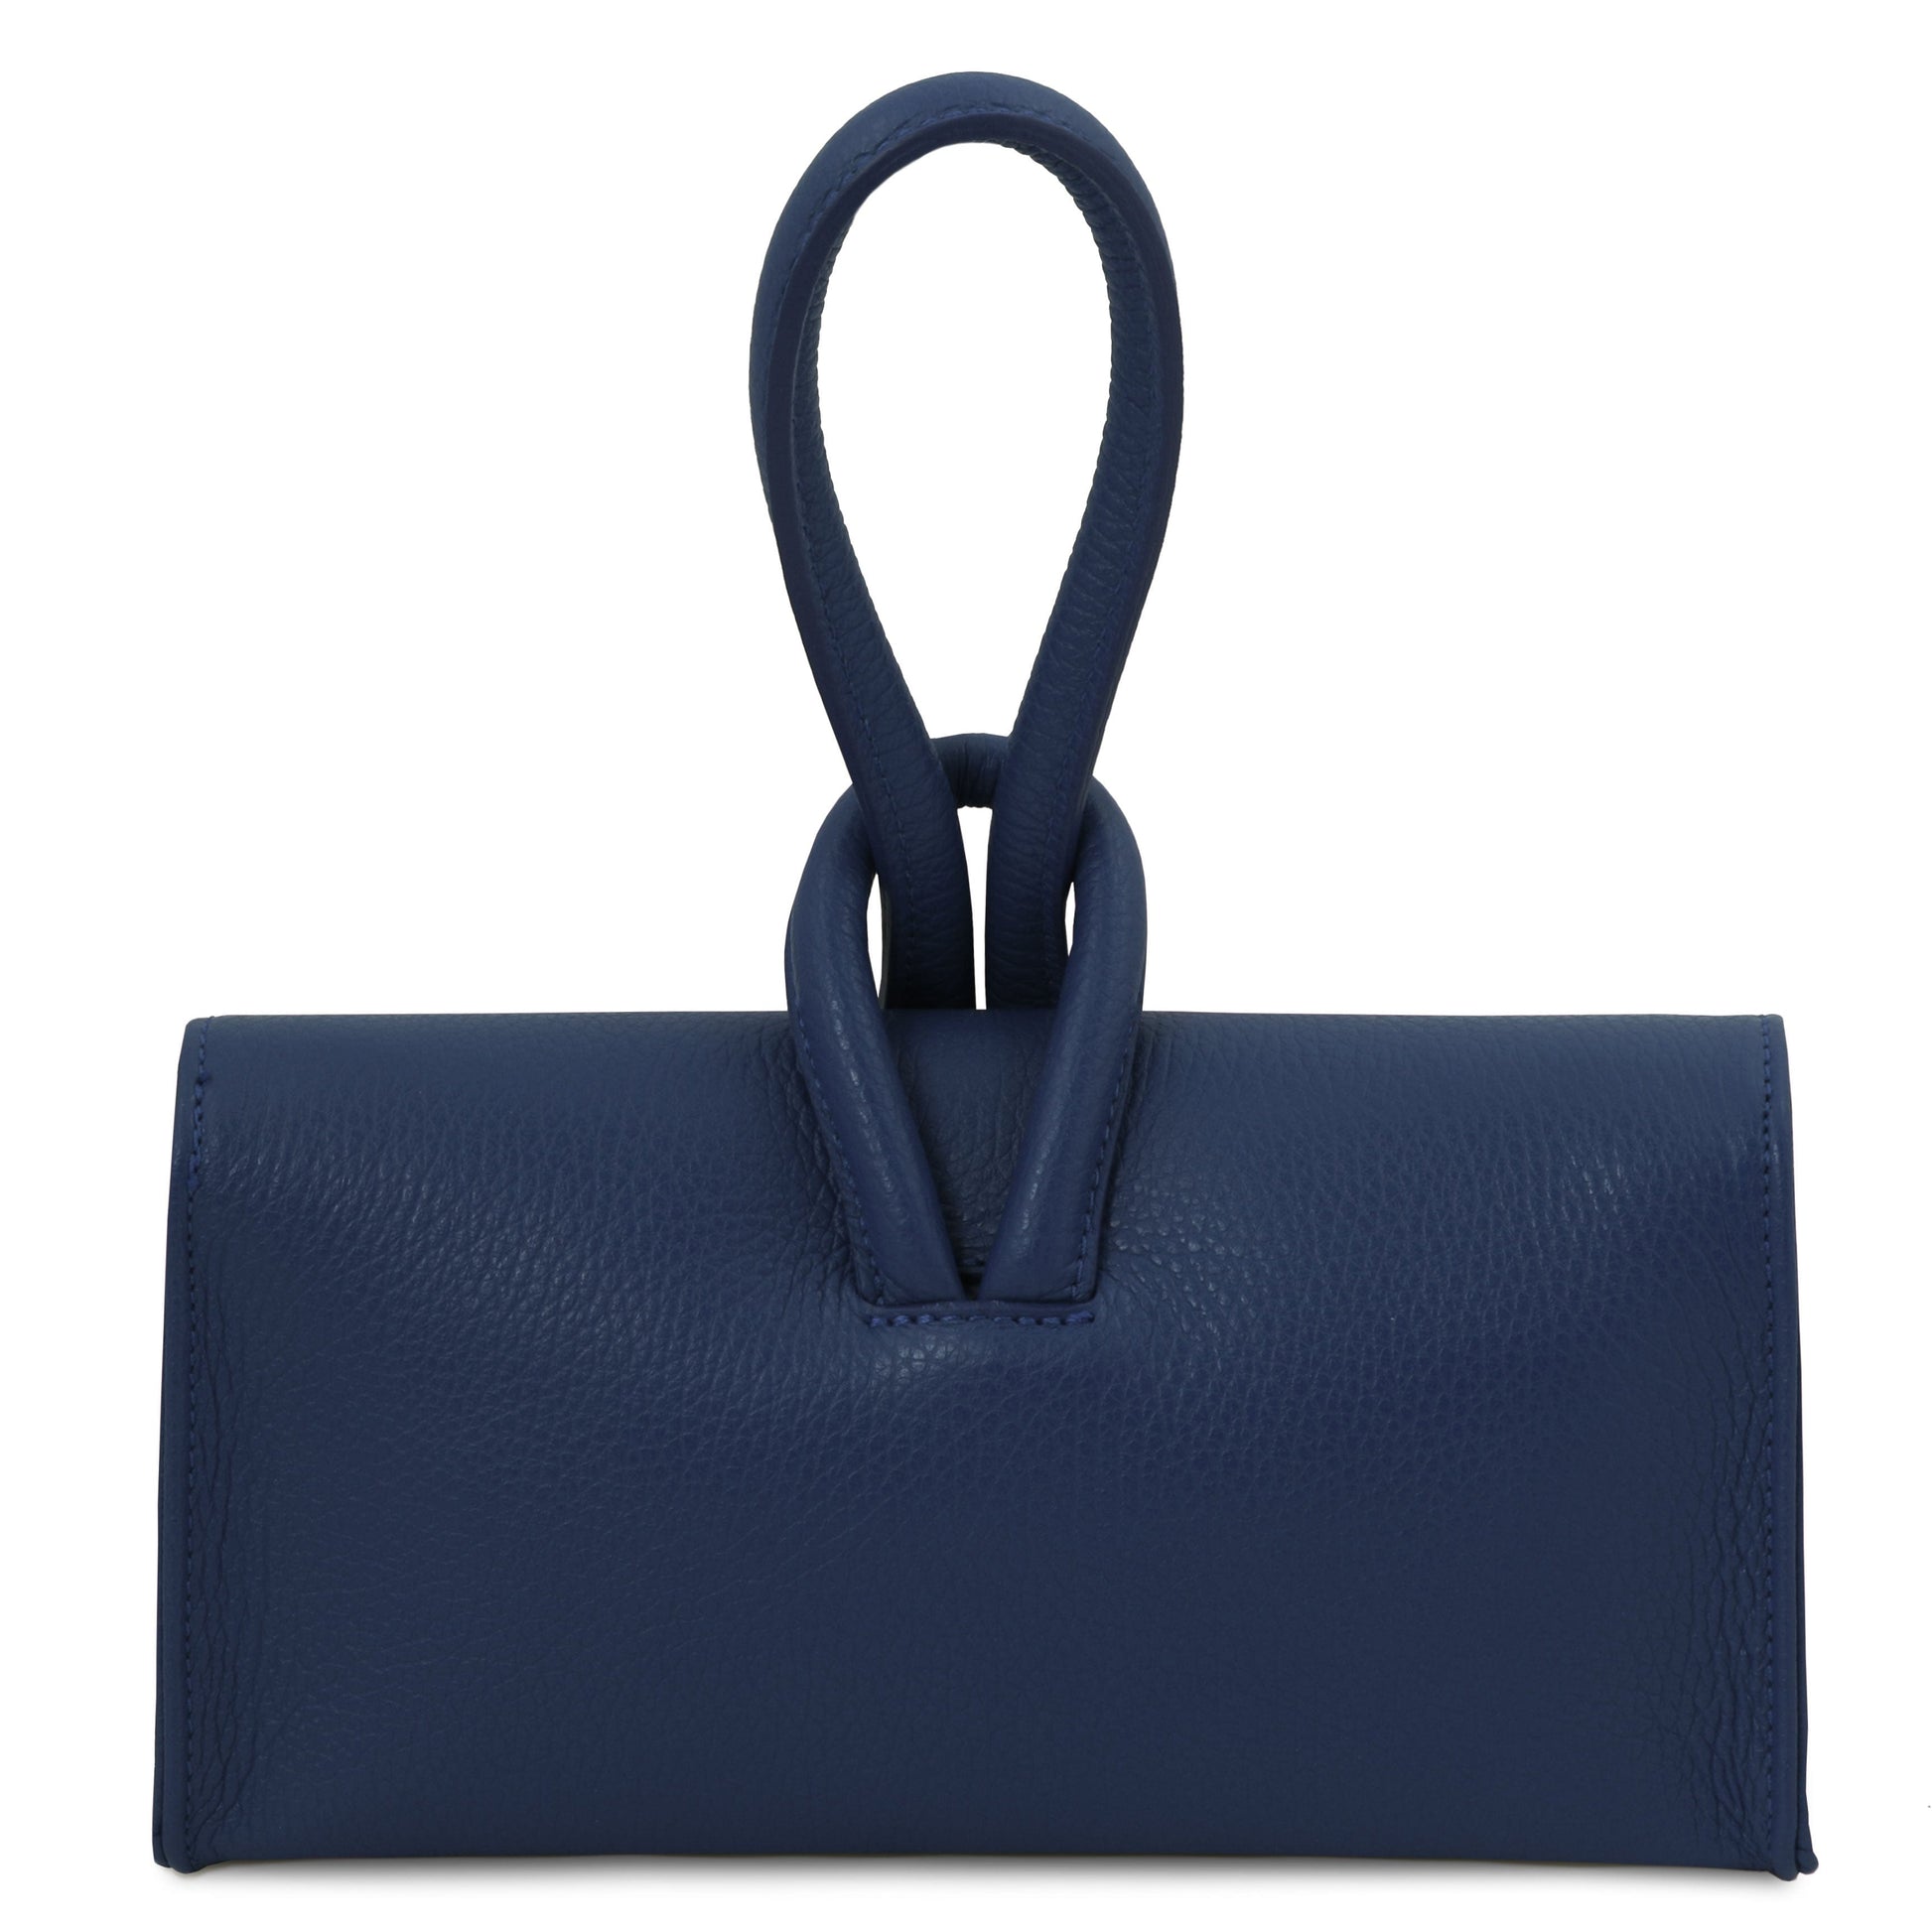 TL Bag - Leather clutch | TL141990 - Premium Leather handbags - Just €73.20! Shop now at San Rocco Italia